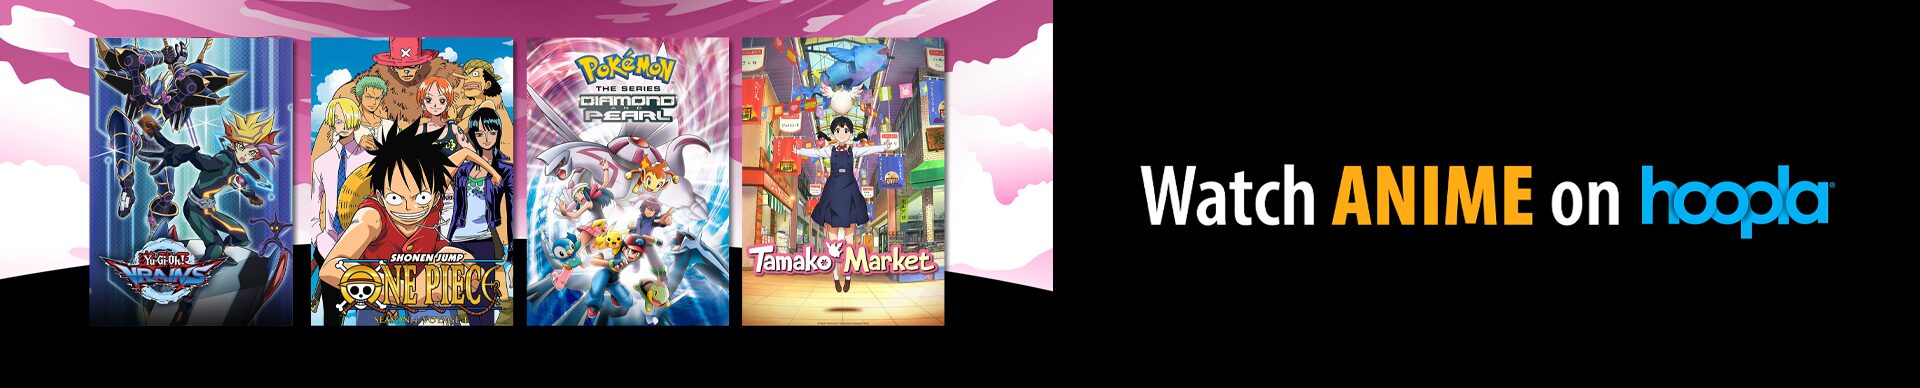 Yu-Gi-Oh! VRAINS, One Piece, Pokemon: Diamond and Pearl - Season 10, Tamako Market Image text, ’Watch Anime on hoopla’